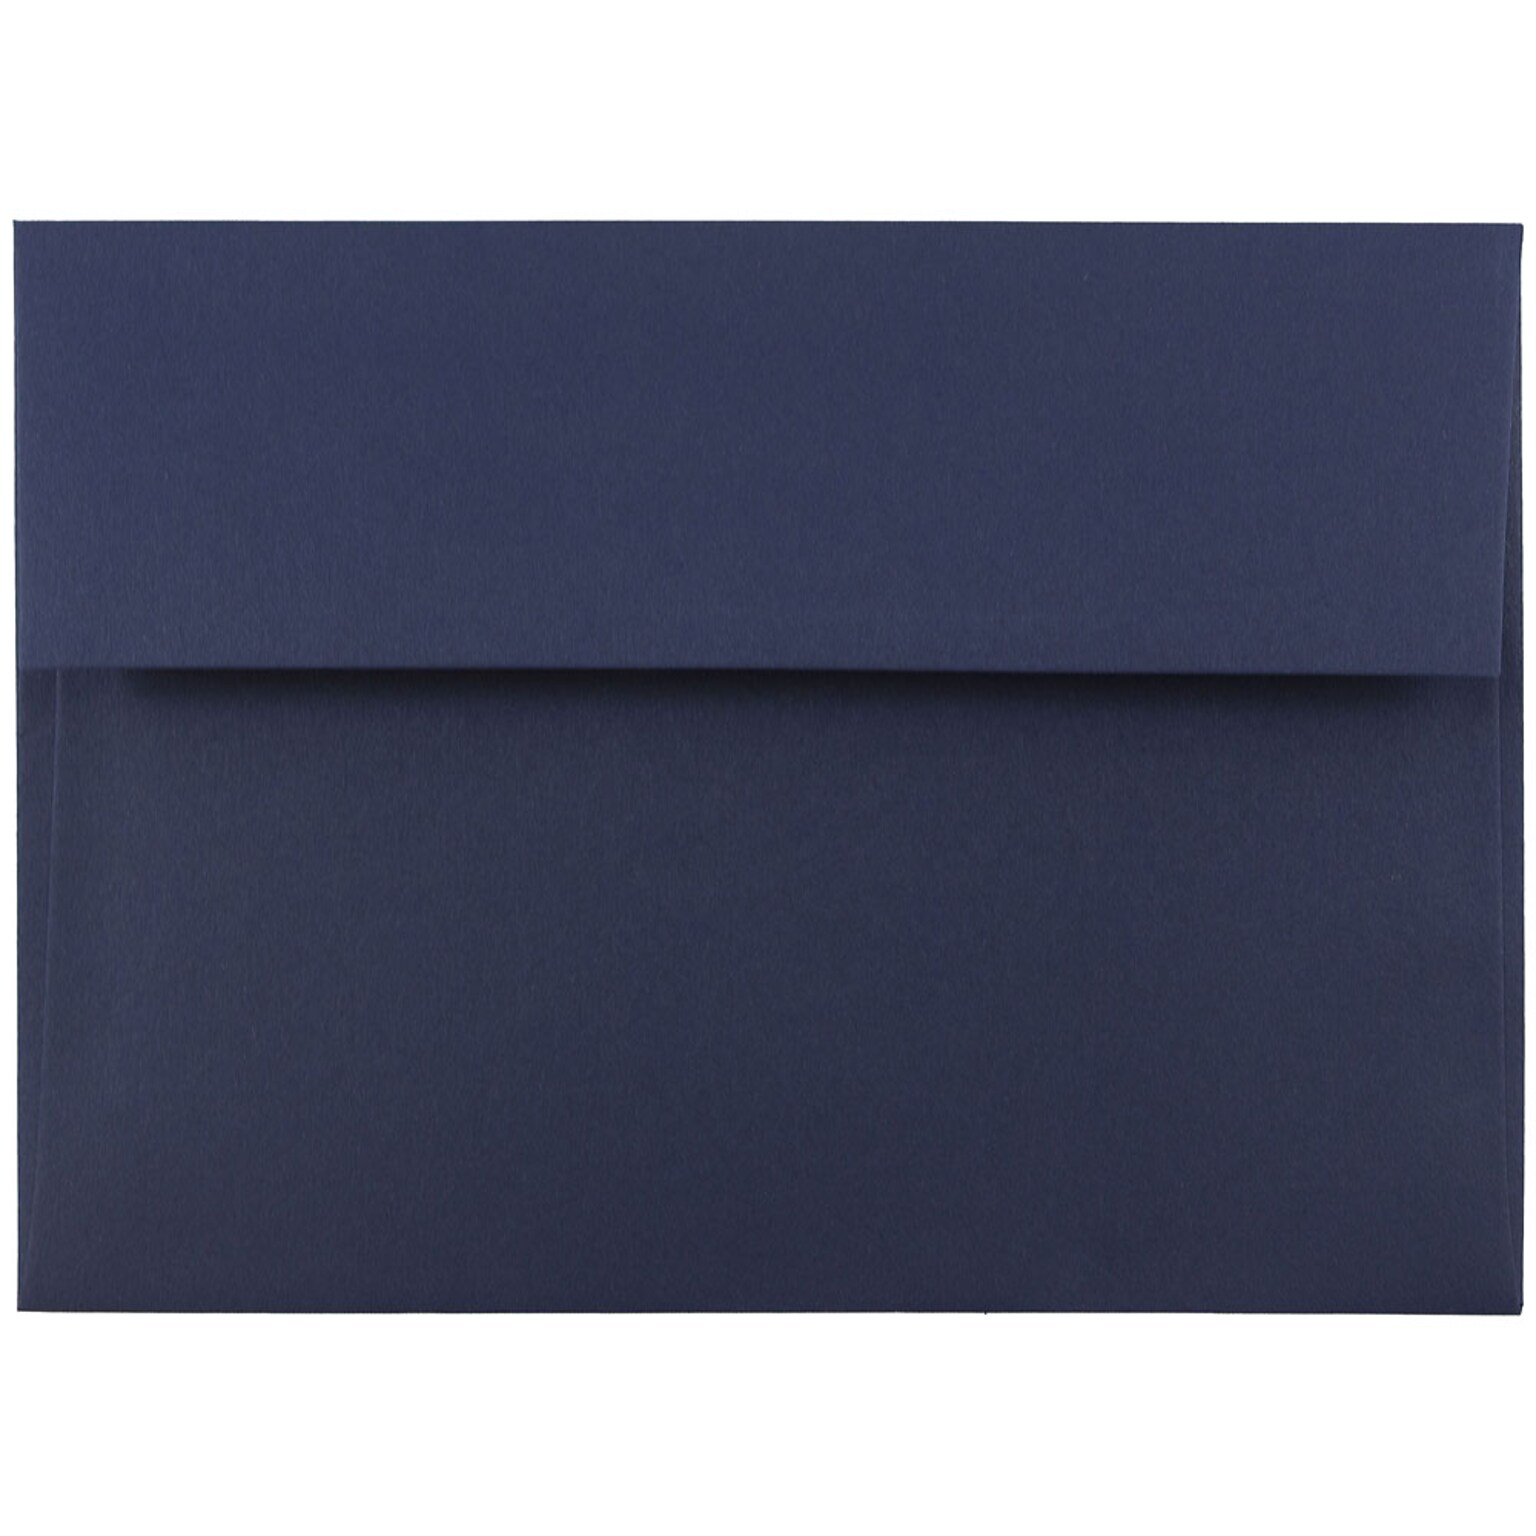 JAM Paper® A7 Invitation Envelopes, 5.25 x 7.25, Navy Blue, Bulk 1000/Carton (LEBA717B)